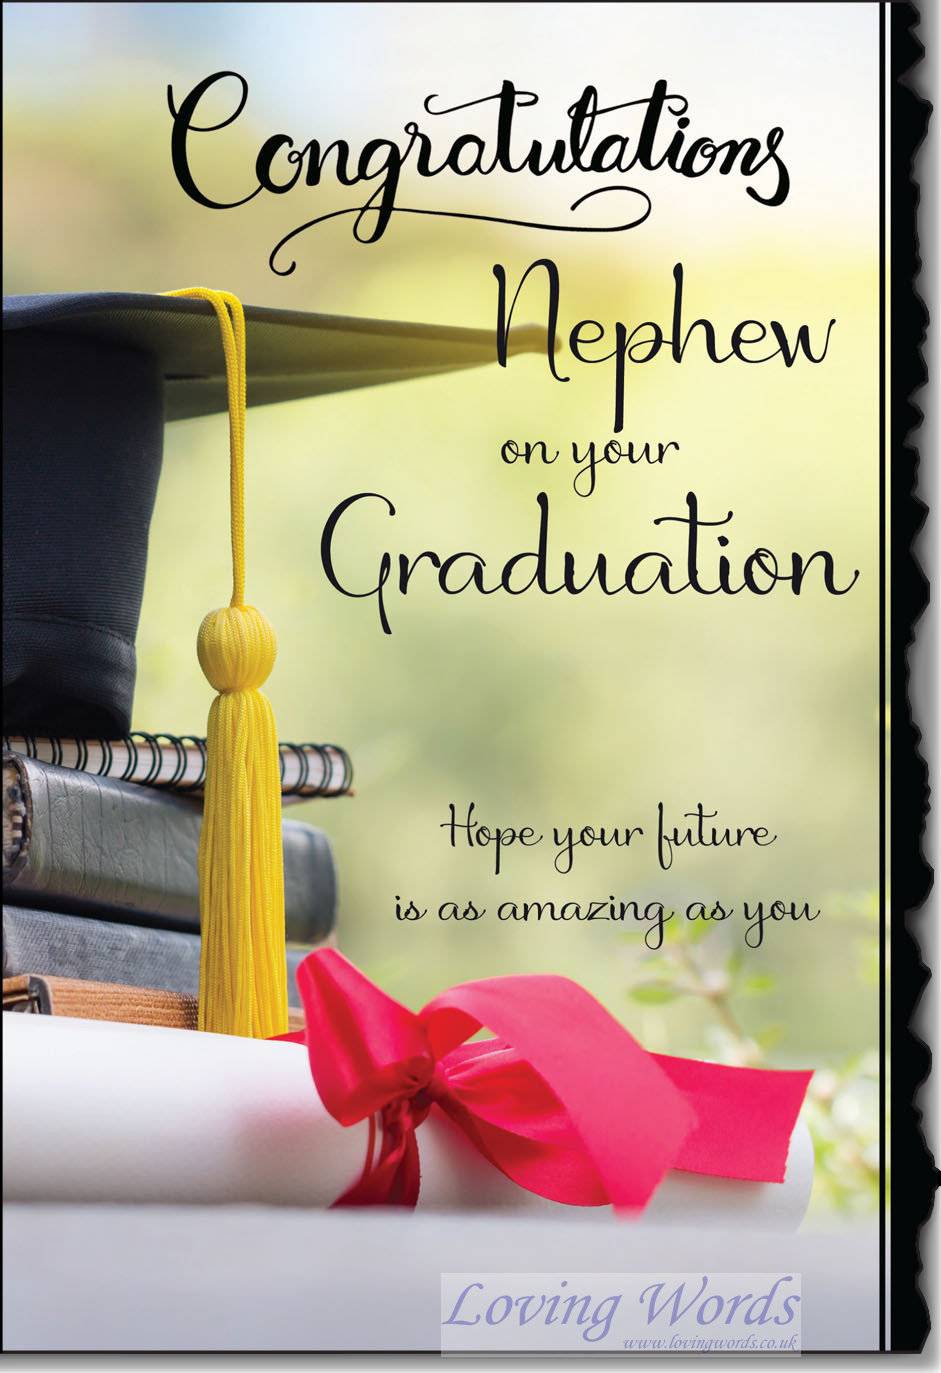 nephew-graduation-greeting-cards-by-loving-words